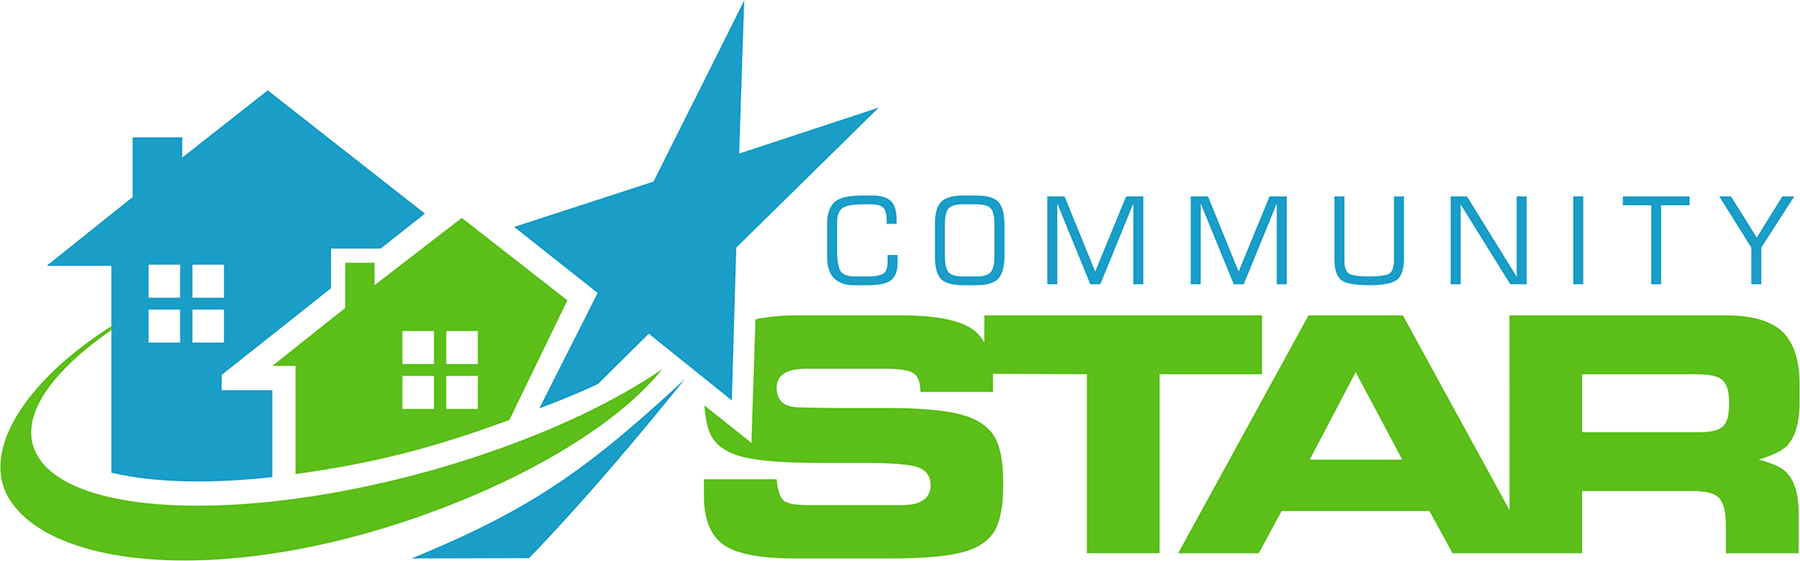 Community Star Award Logo